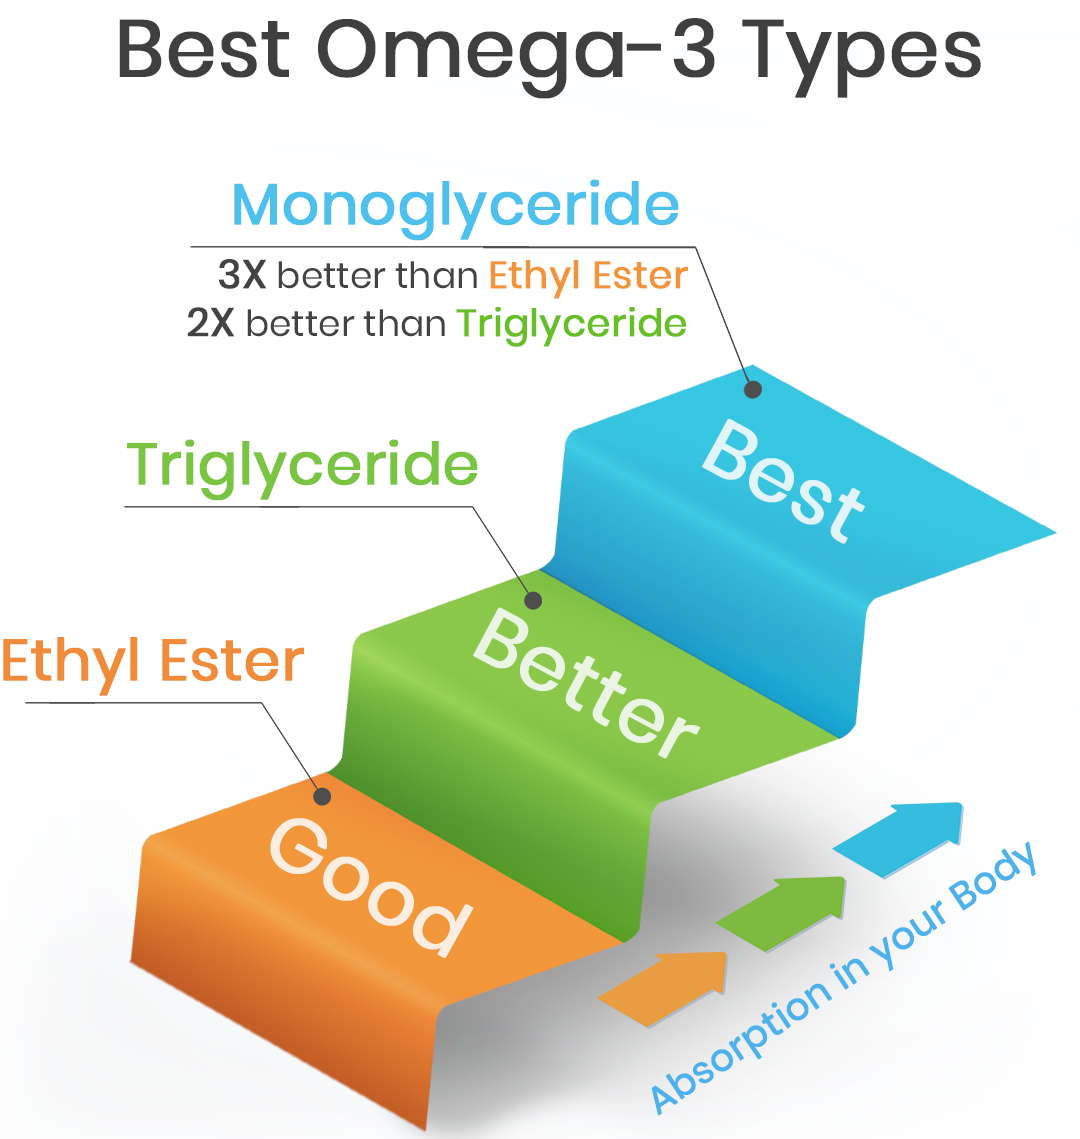 Best Omega 3 is monoglyceride